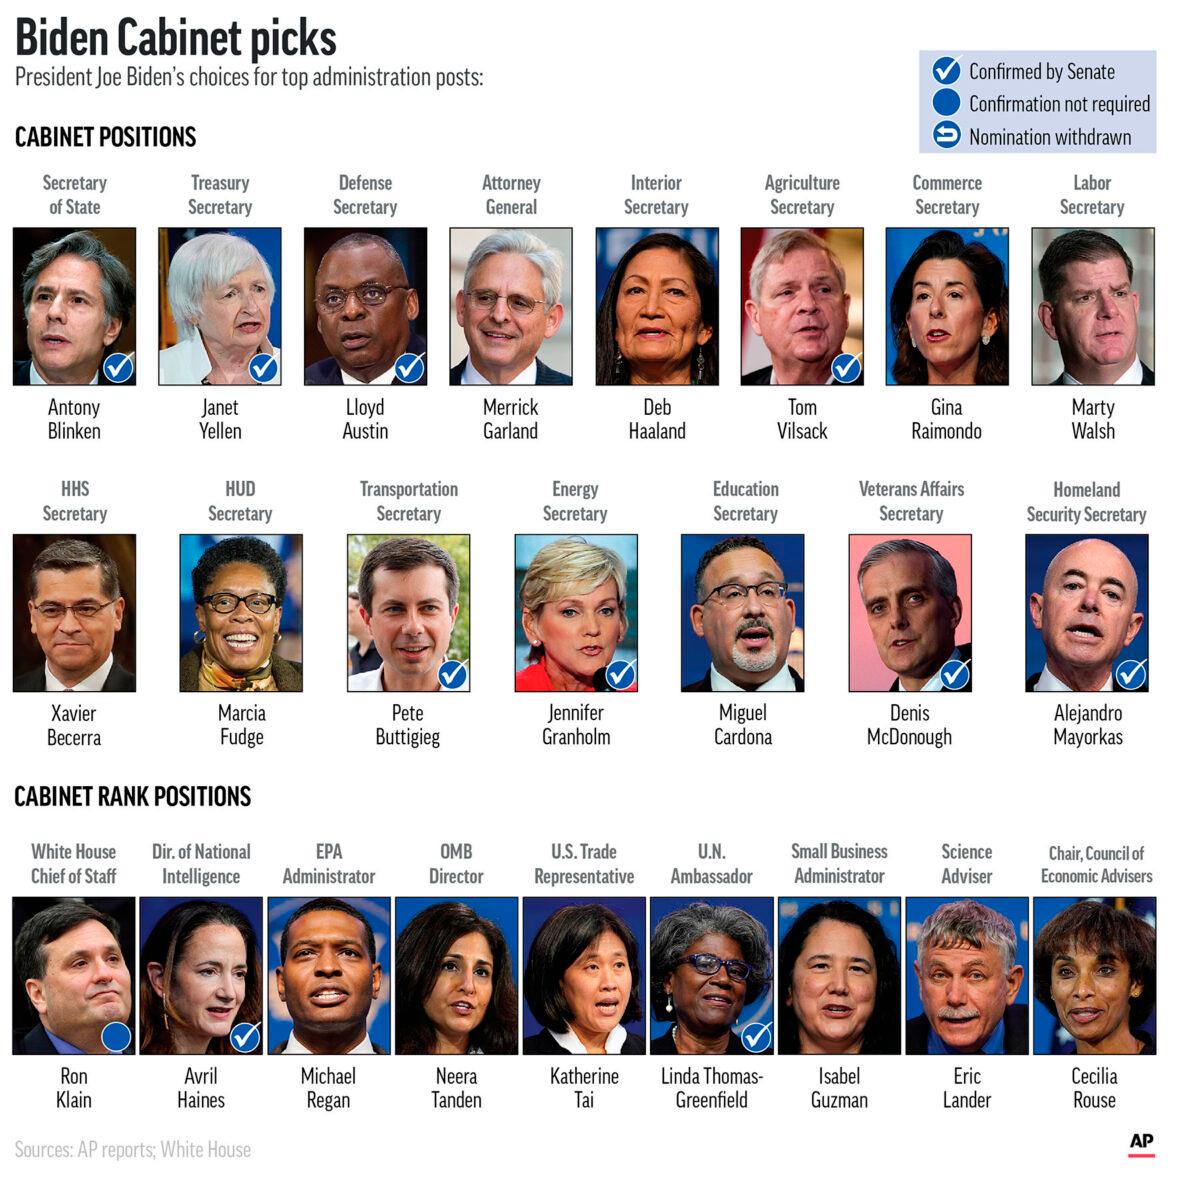 President Joe Biden’s Cabinet and Cabinet-level picks. (AP Graphic)